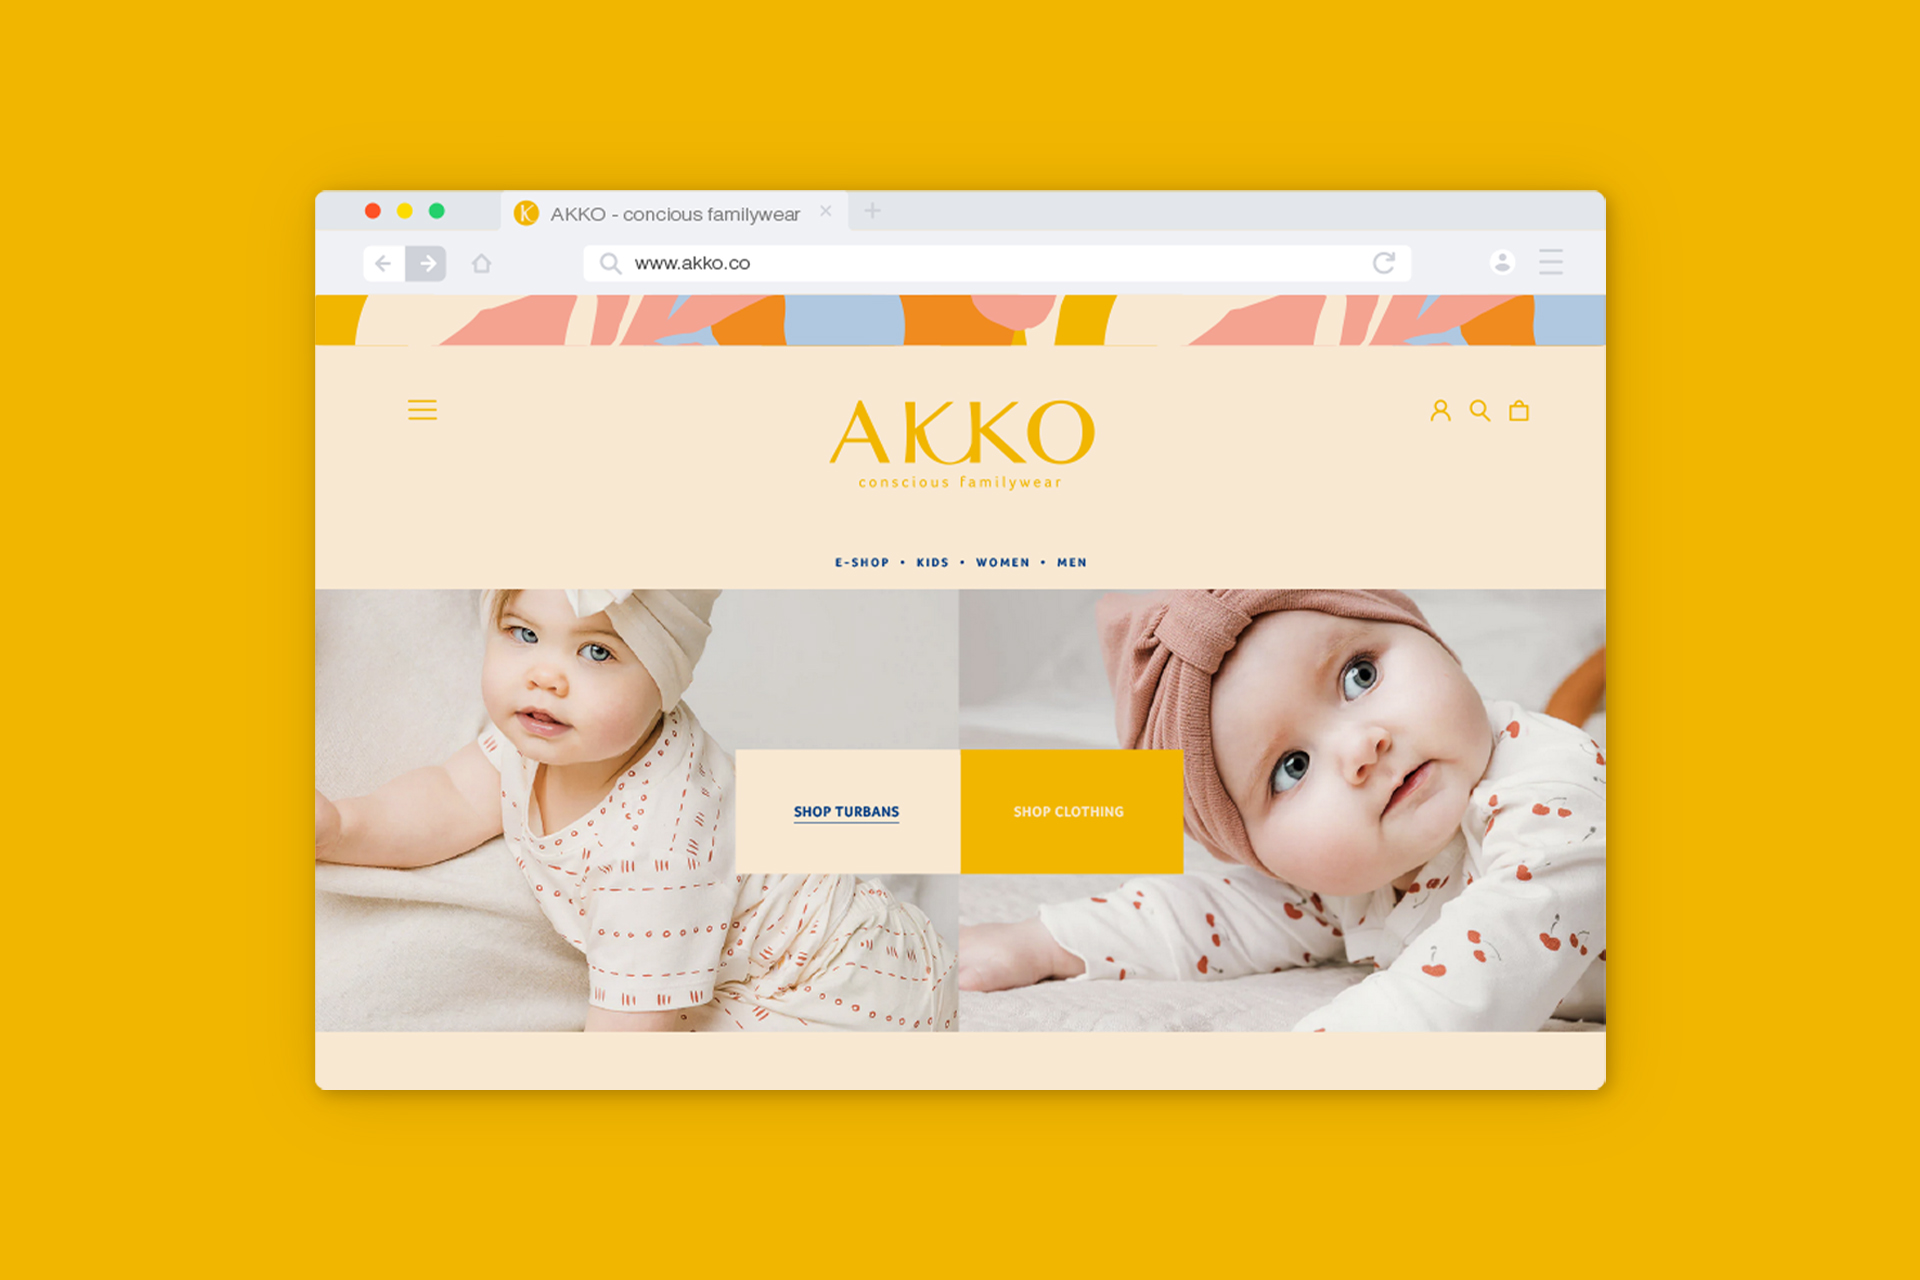 AKKO conscious familywear - website